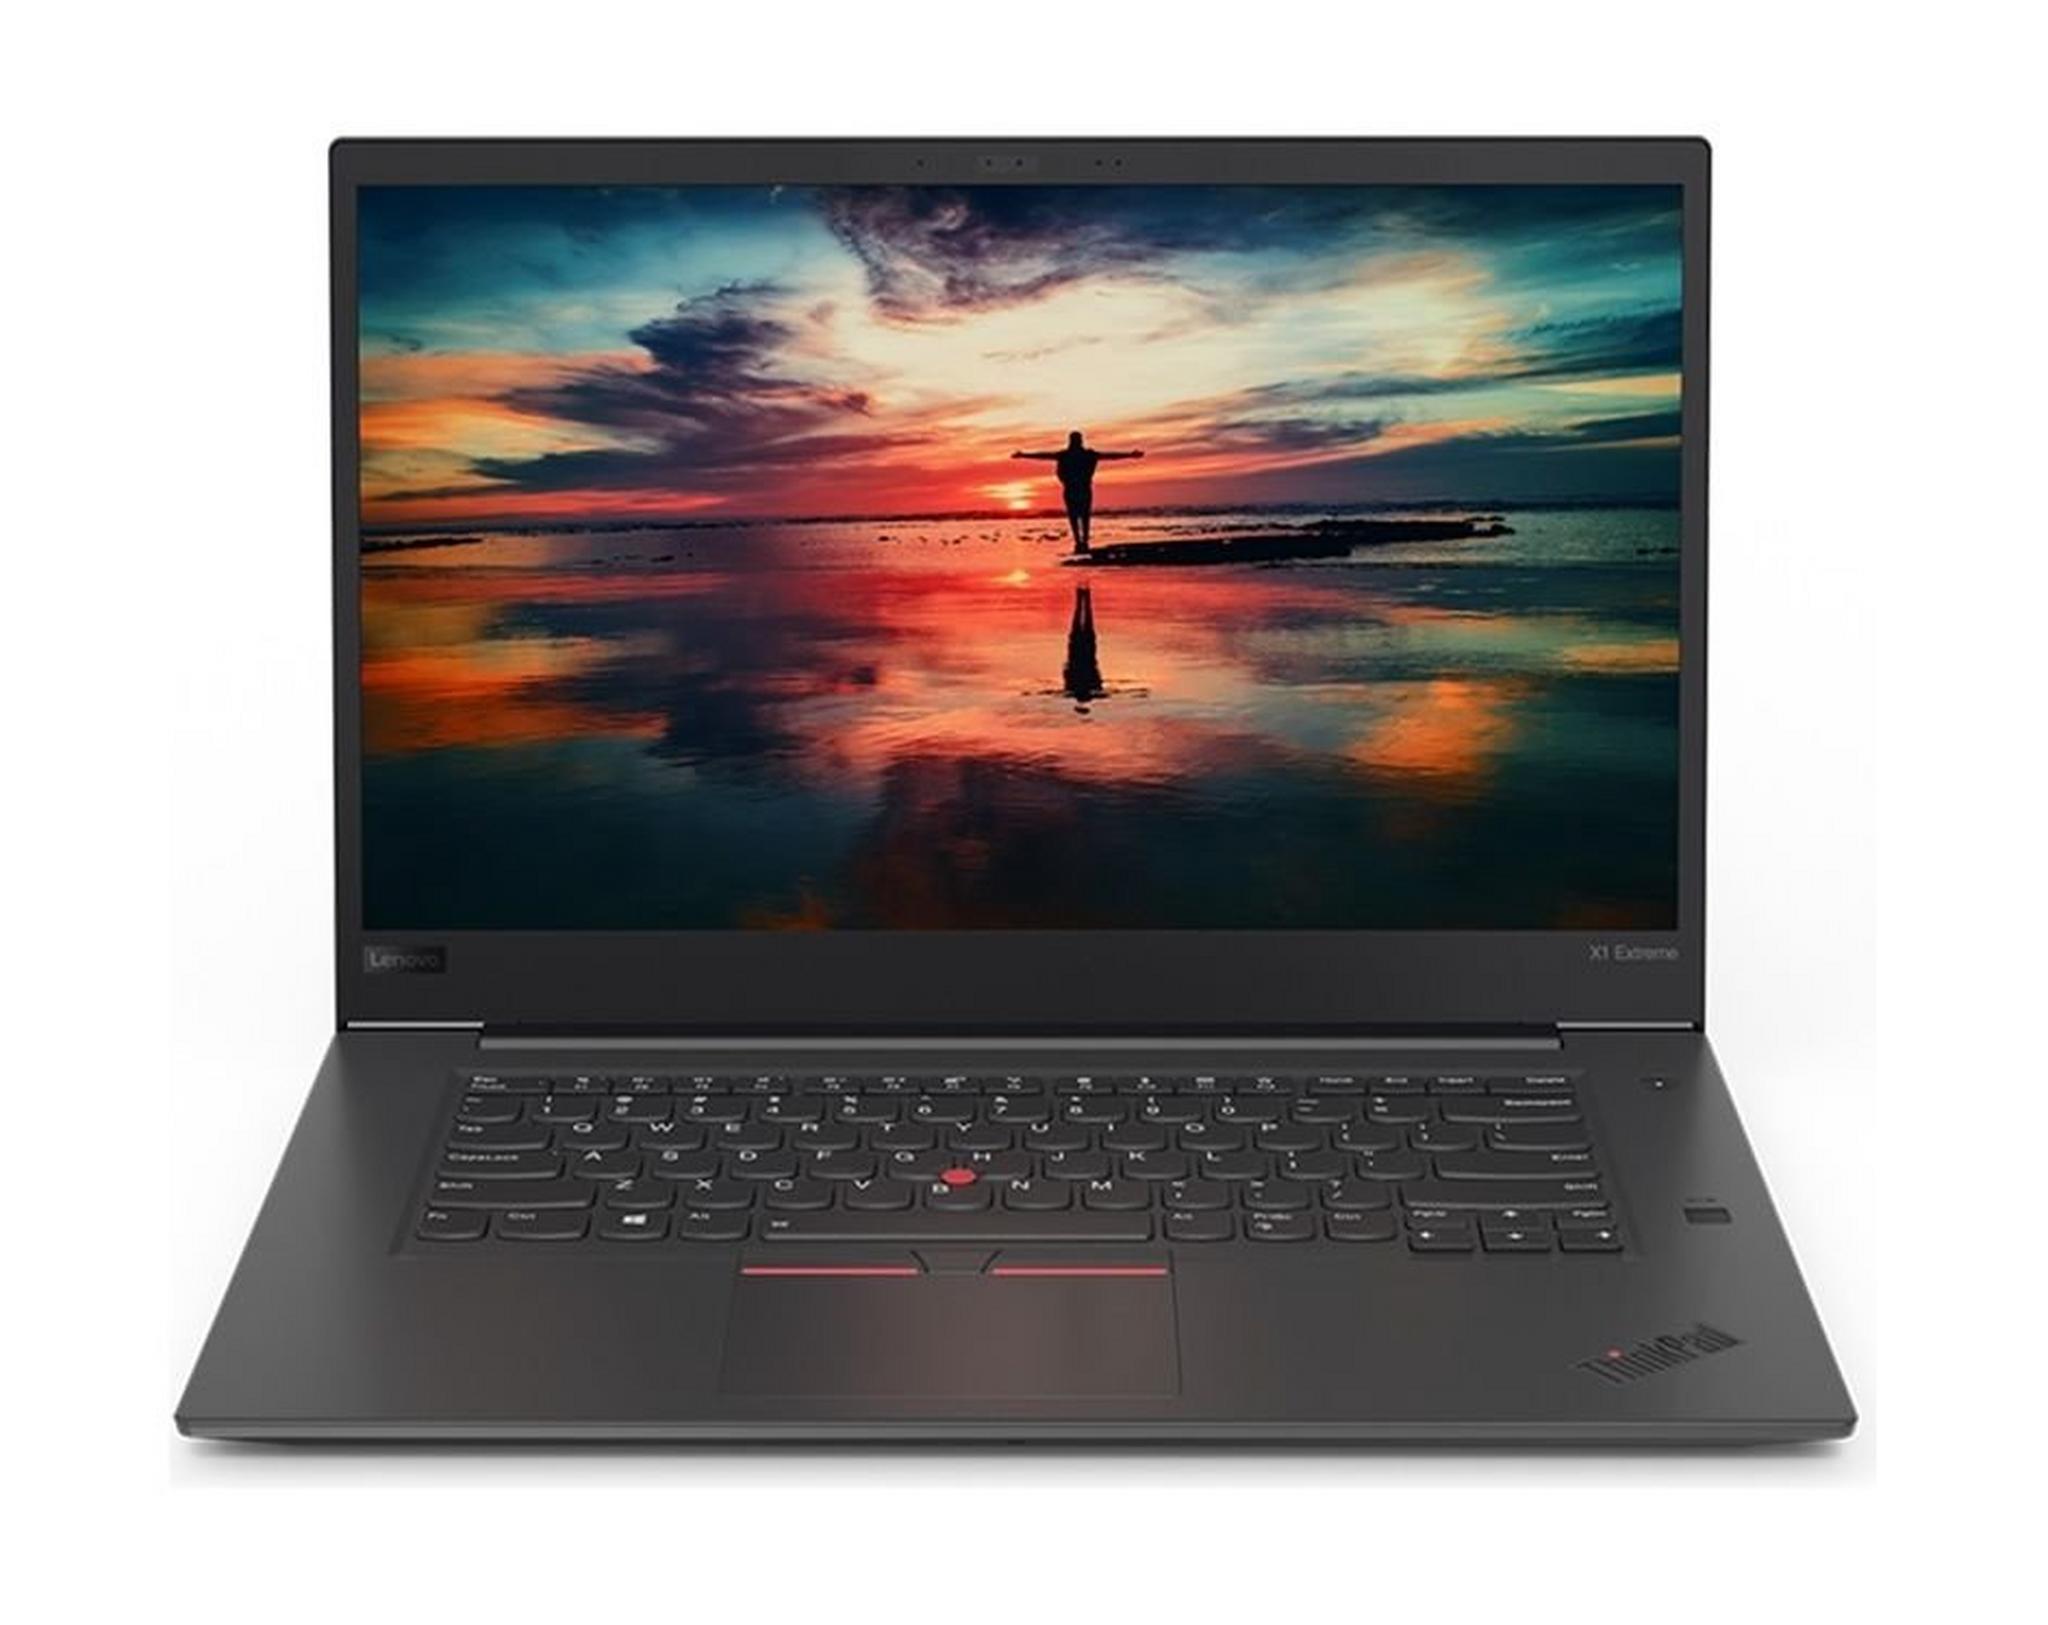 Lenovo ThinkPad X1 Carbon Core i7 16GB RAM 512GB SSD 14 inch Business Laptop - Black